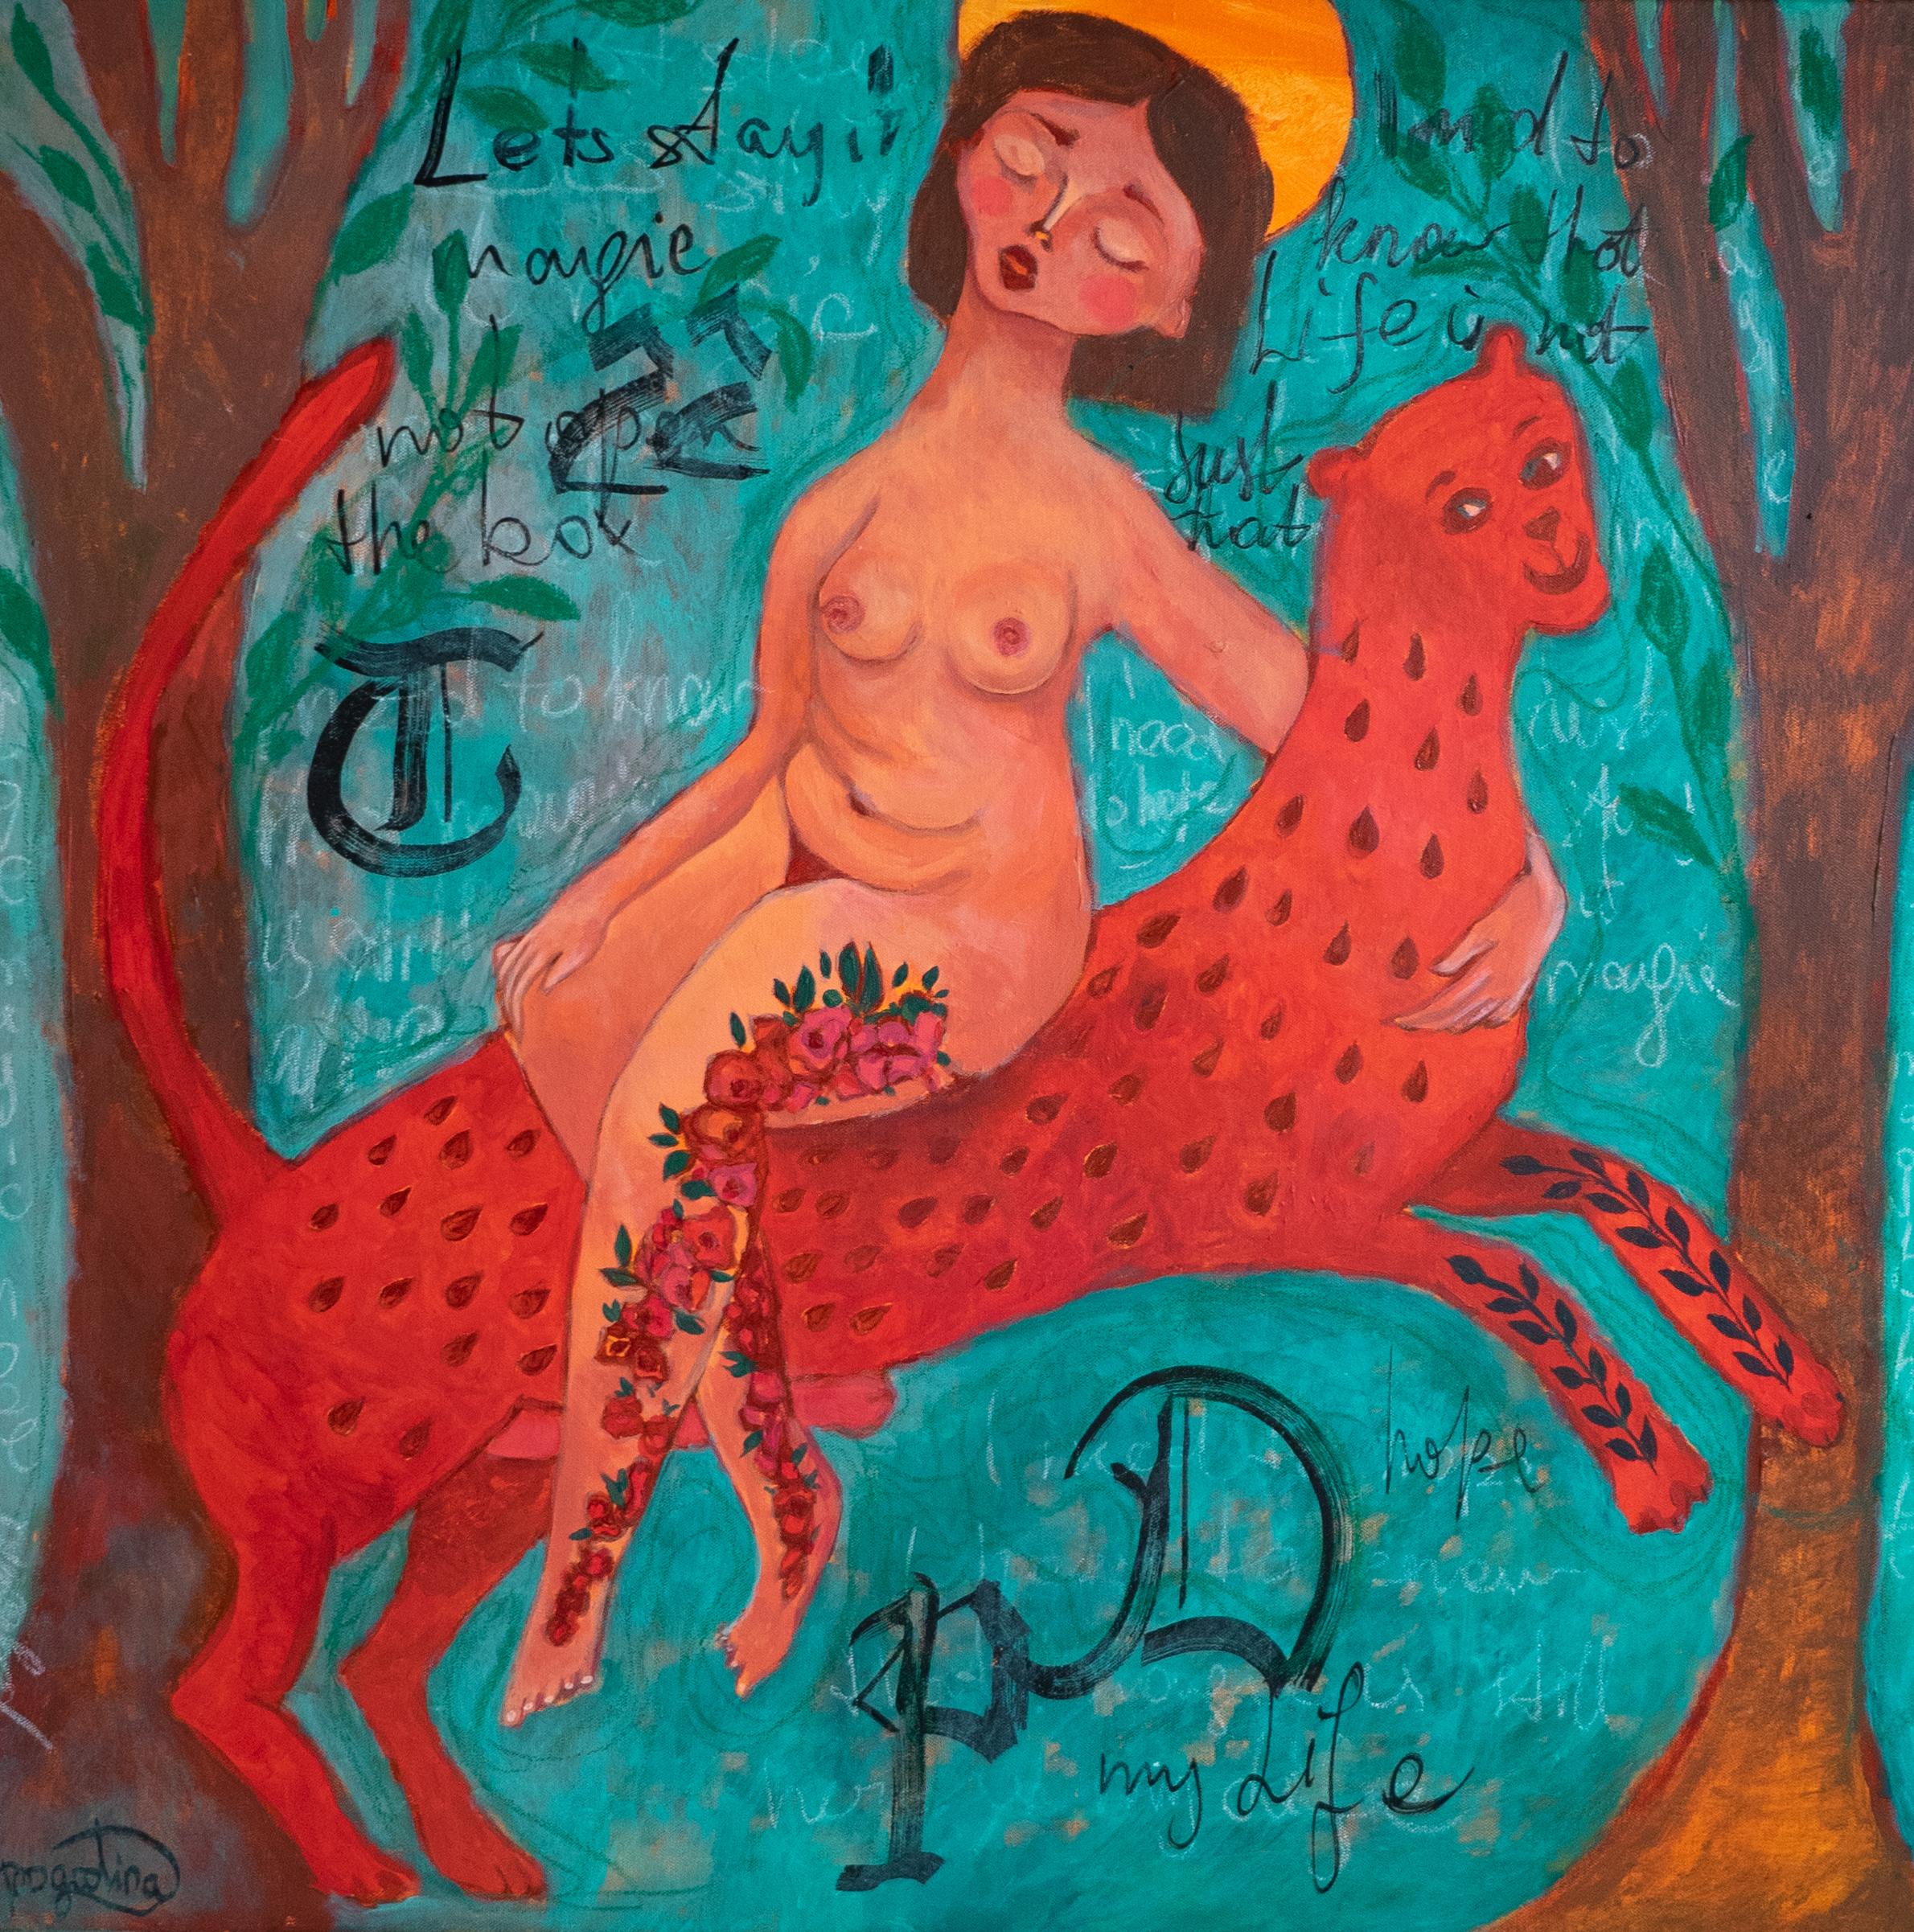 Ya no tengo miedo, colorido cuadro de Arte Naif Fiminista del artista ucraniano